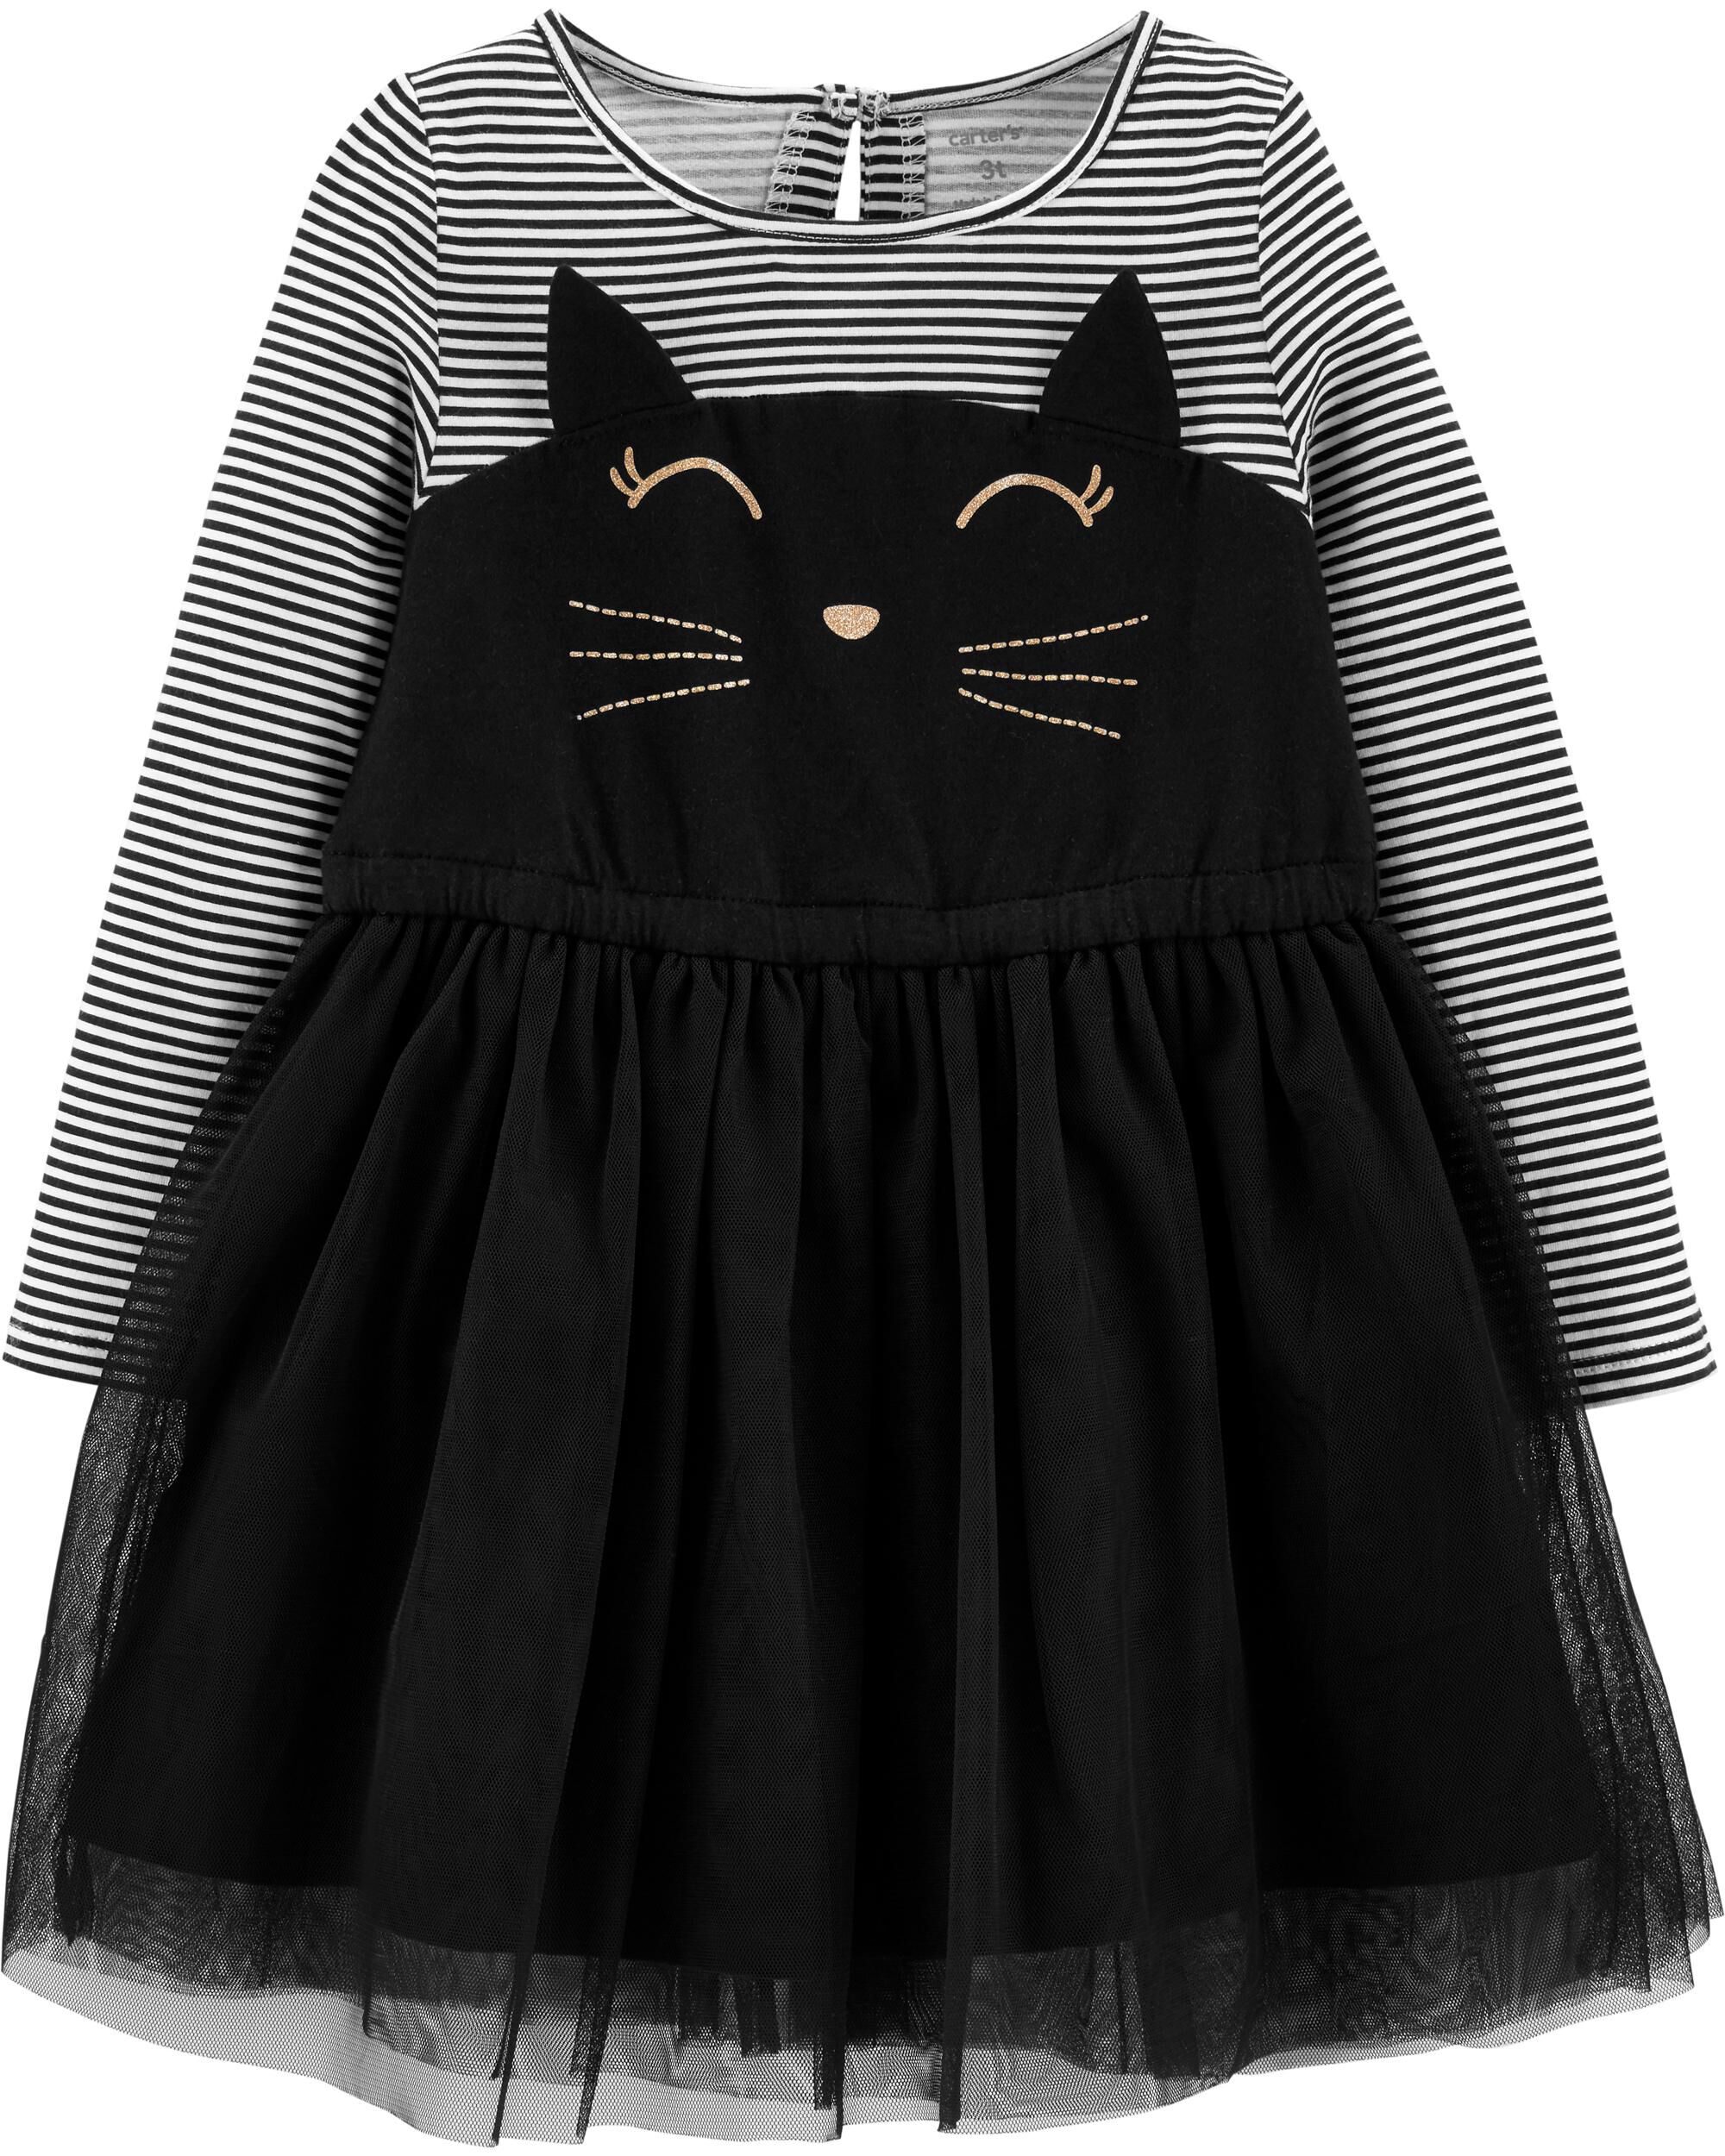 carters black cat dress